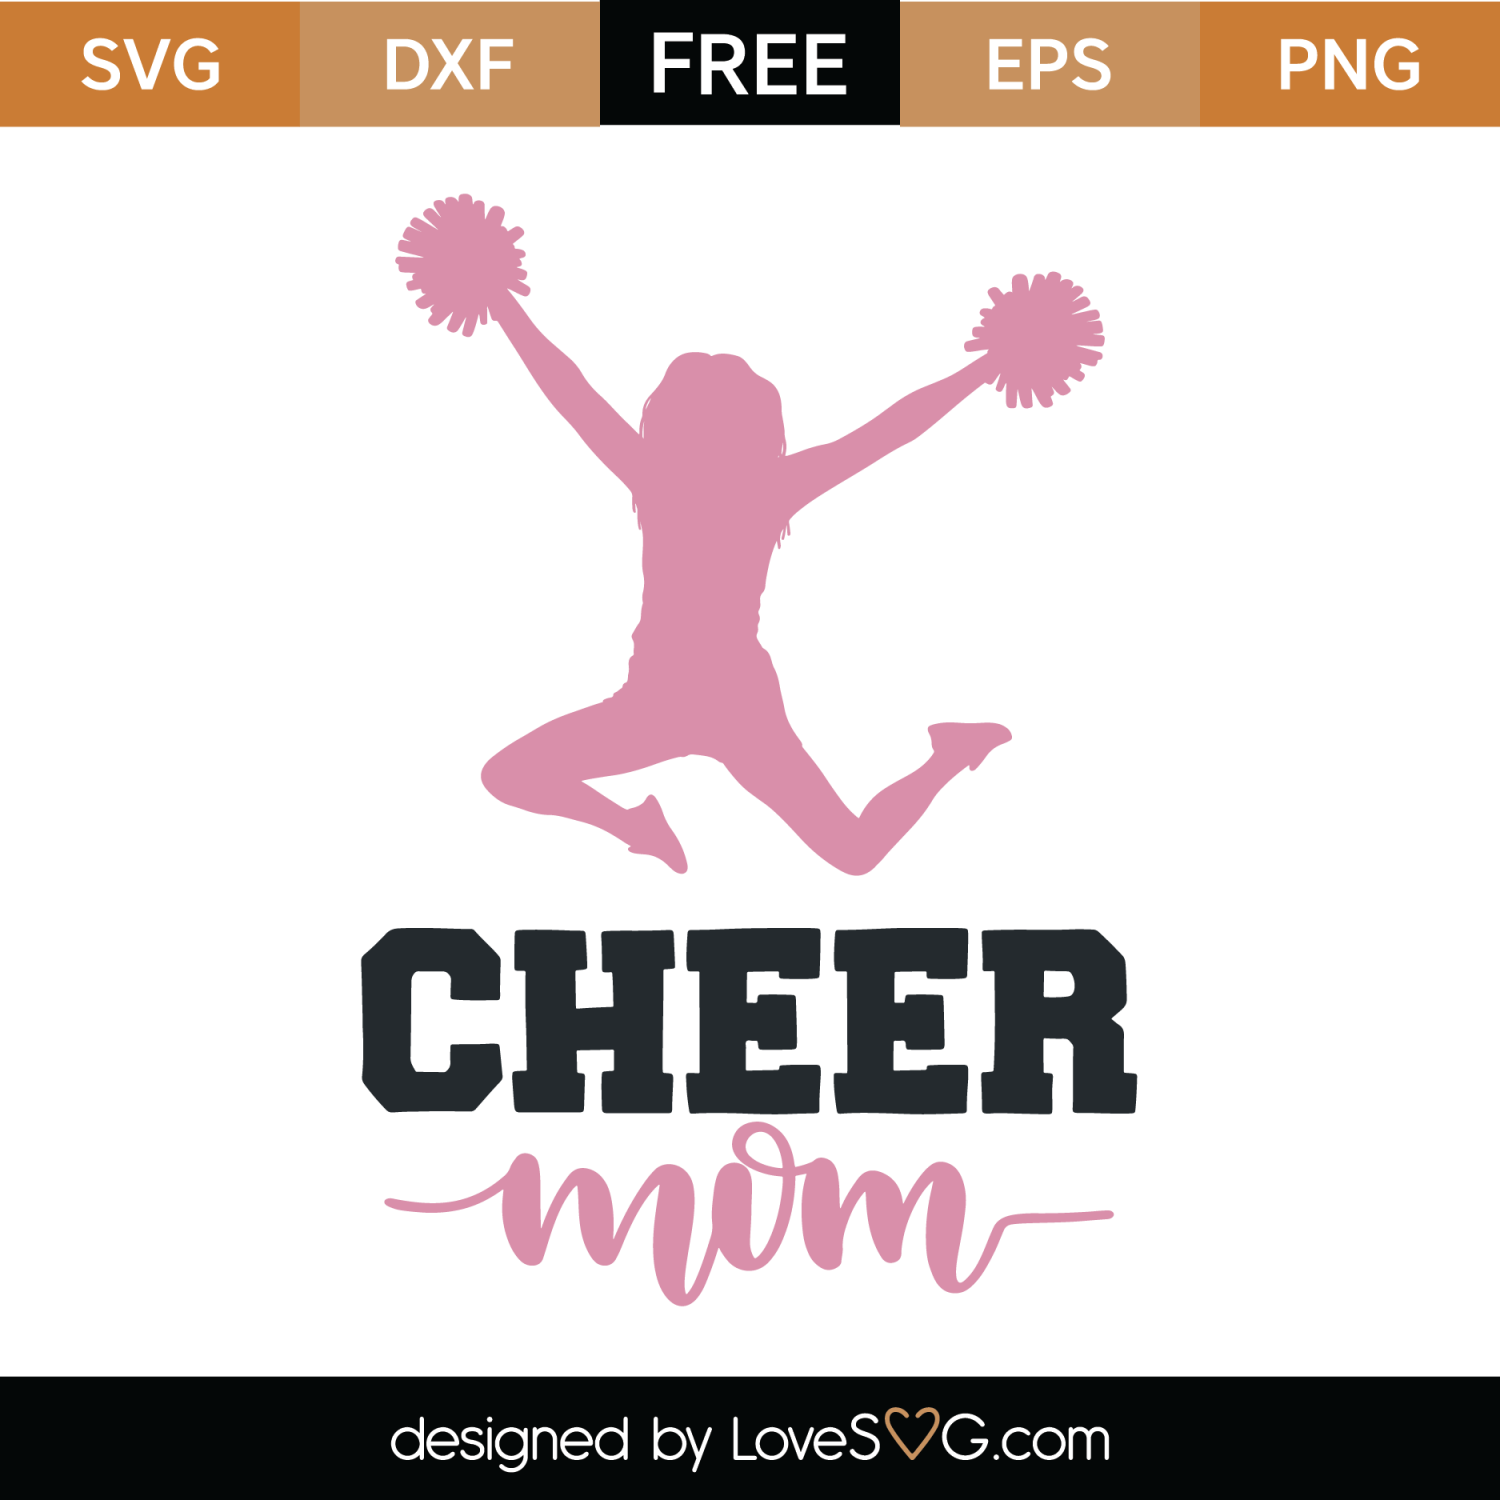 Free Cheer Mom Svg Cut File Lovesvg Com.